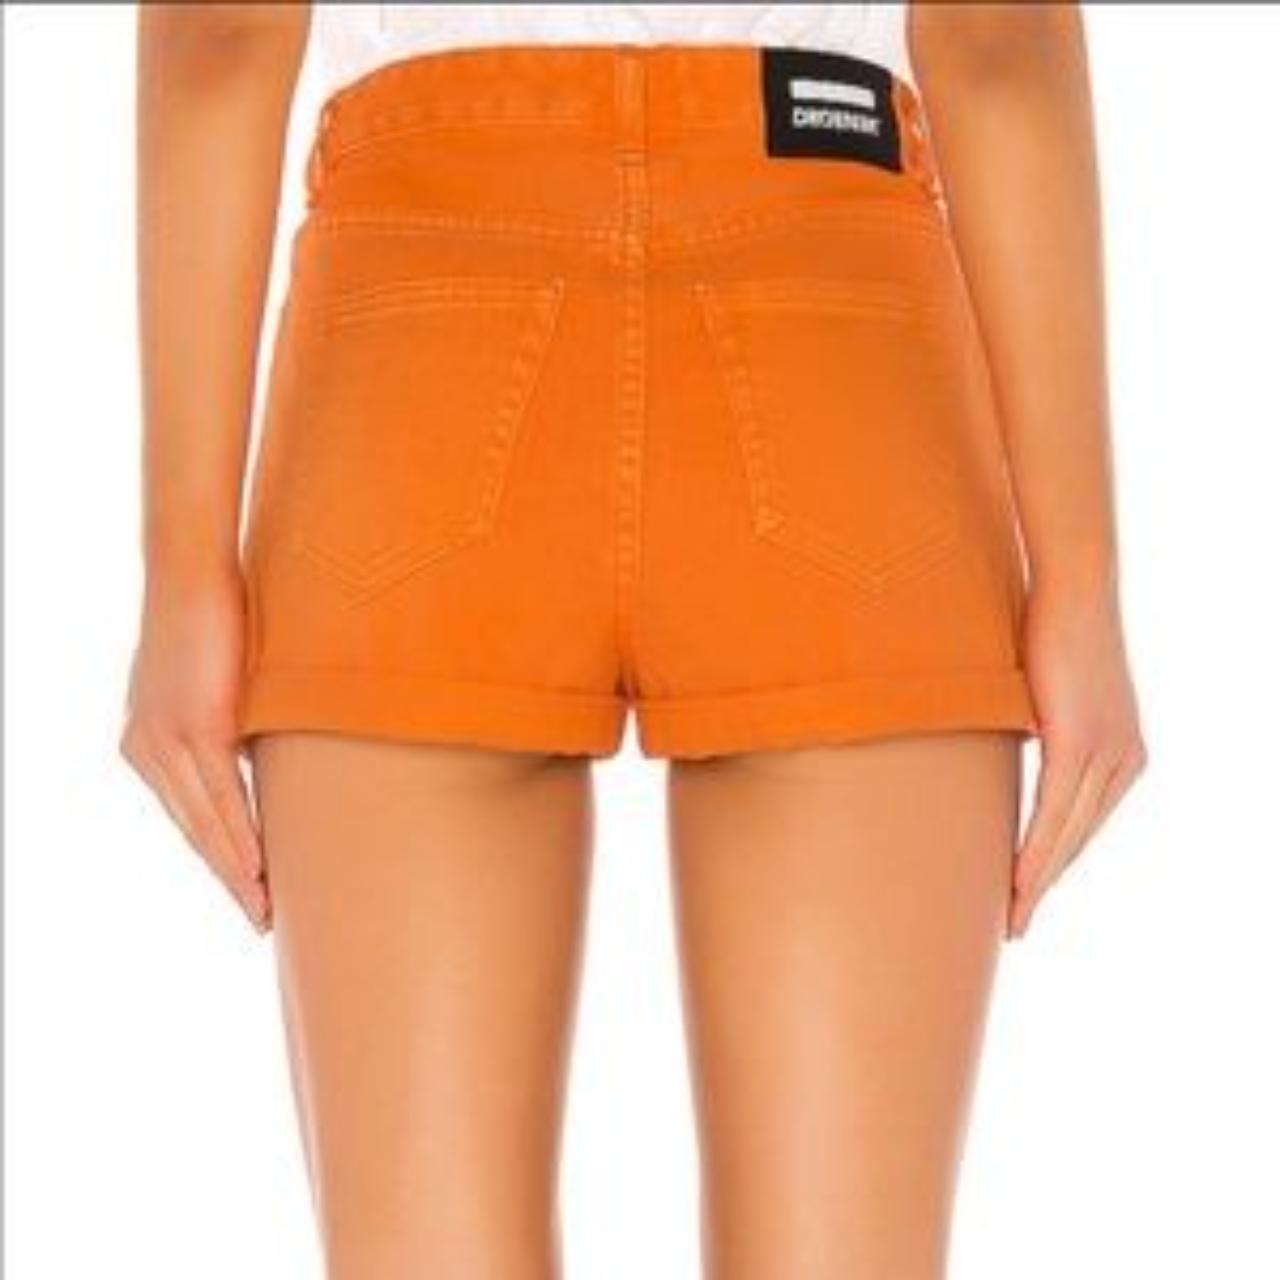 Dr. Denim Women's Orange Shorts (2)